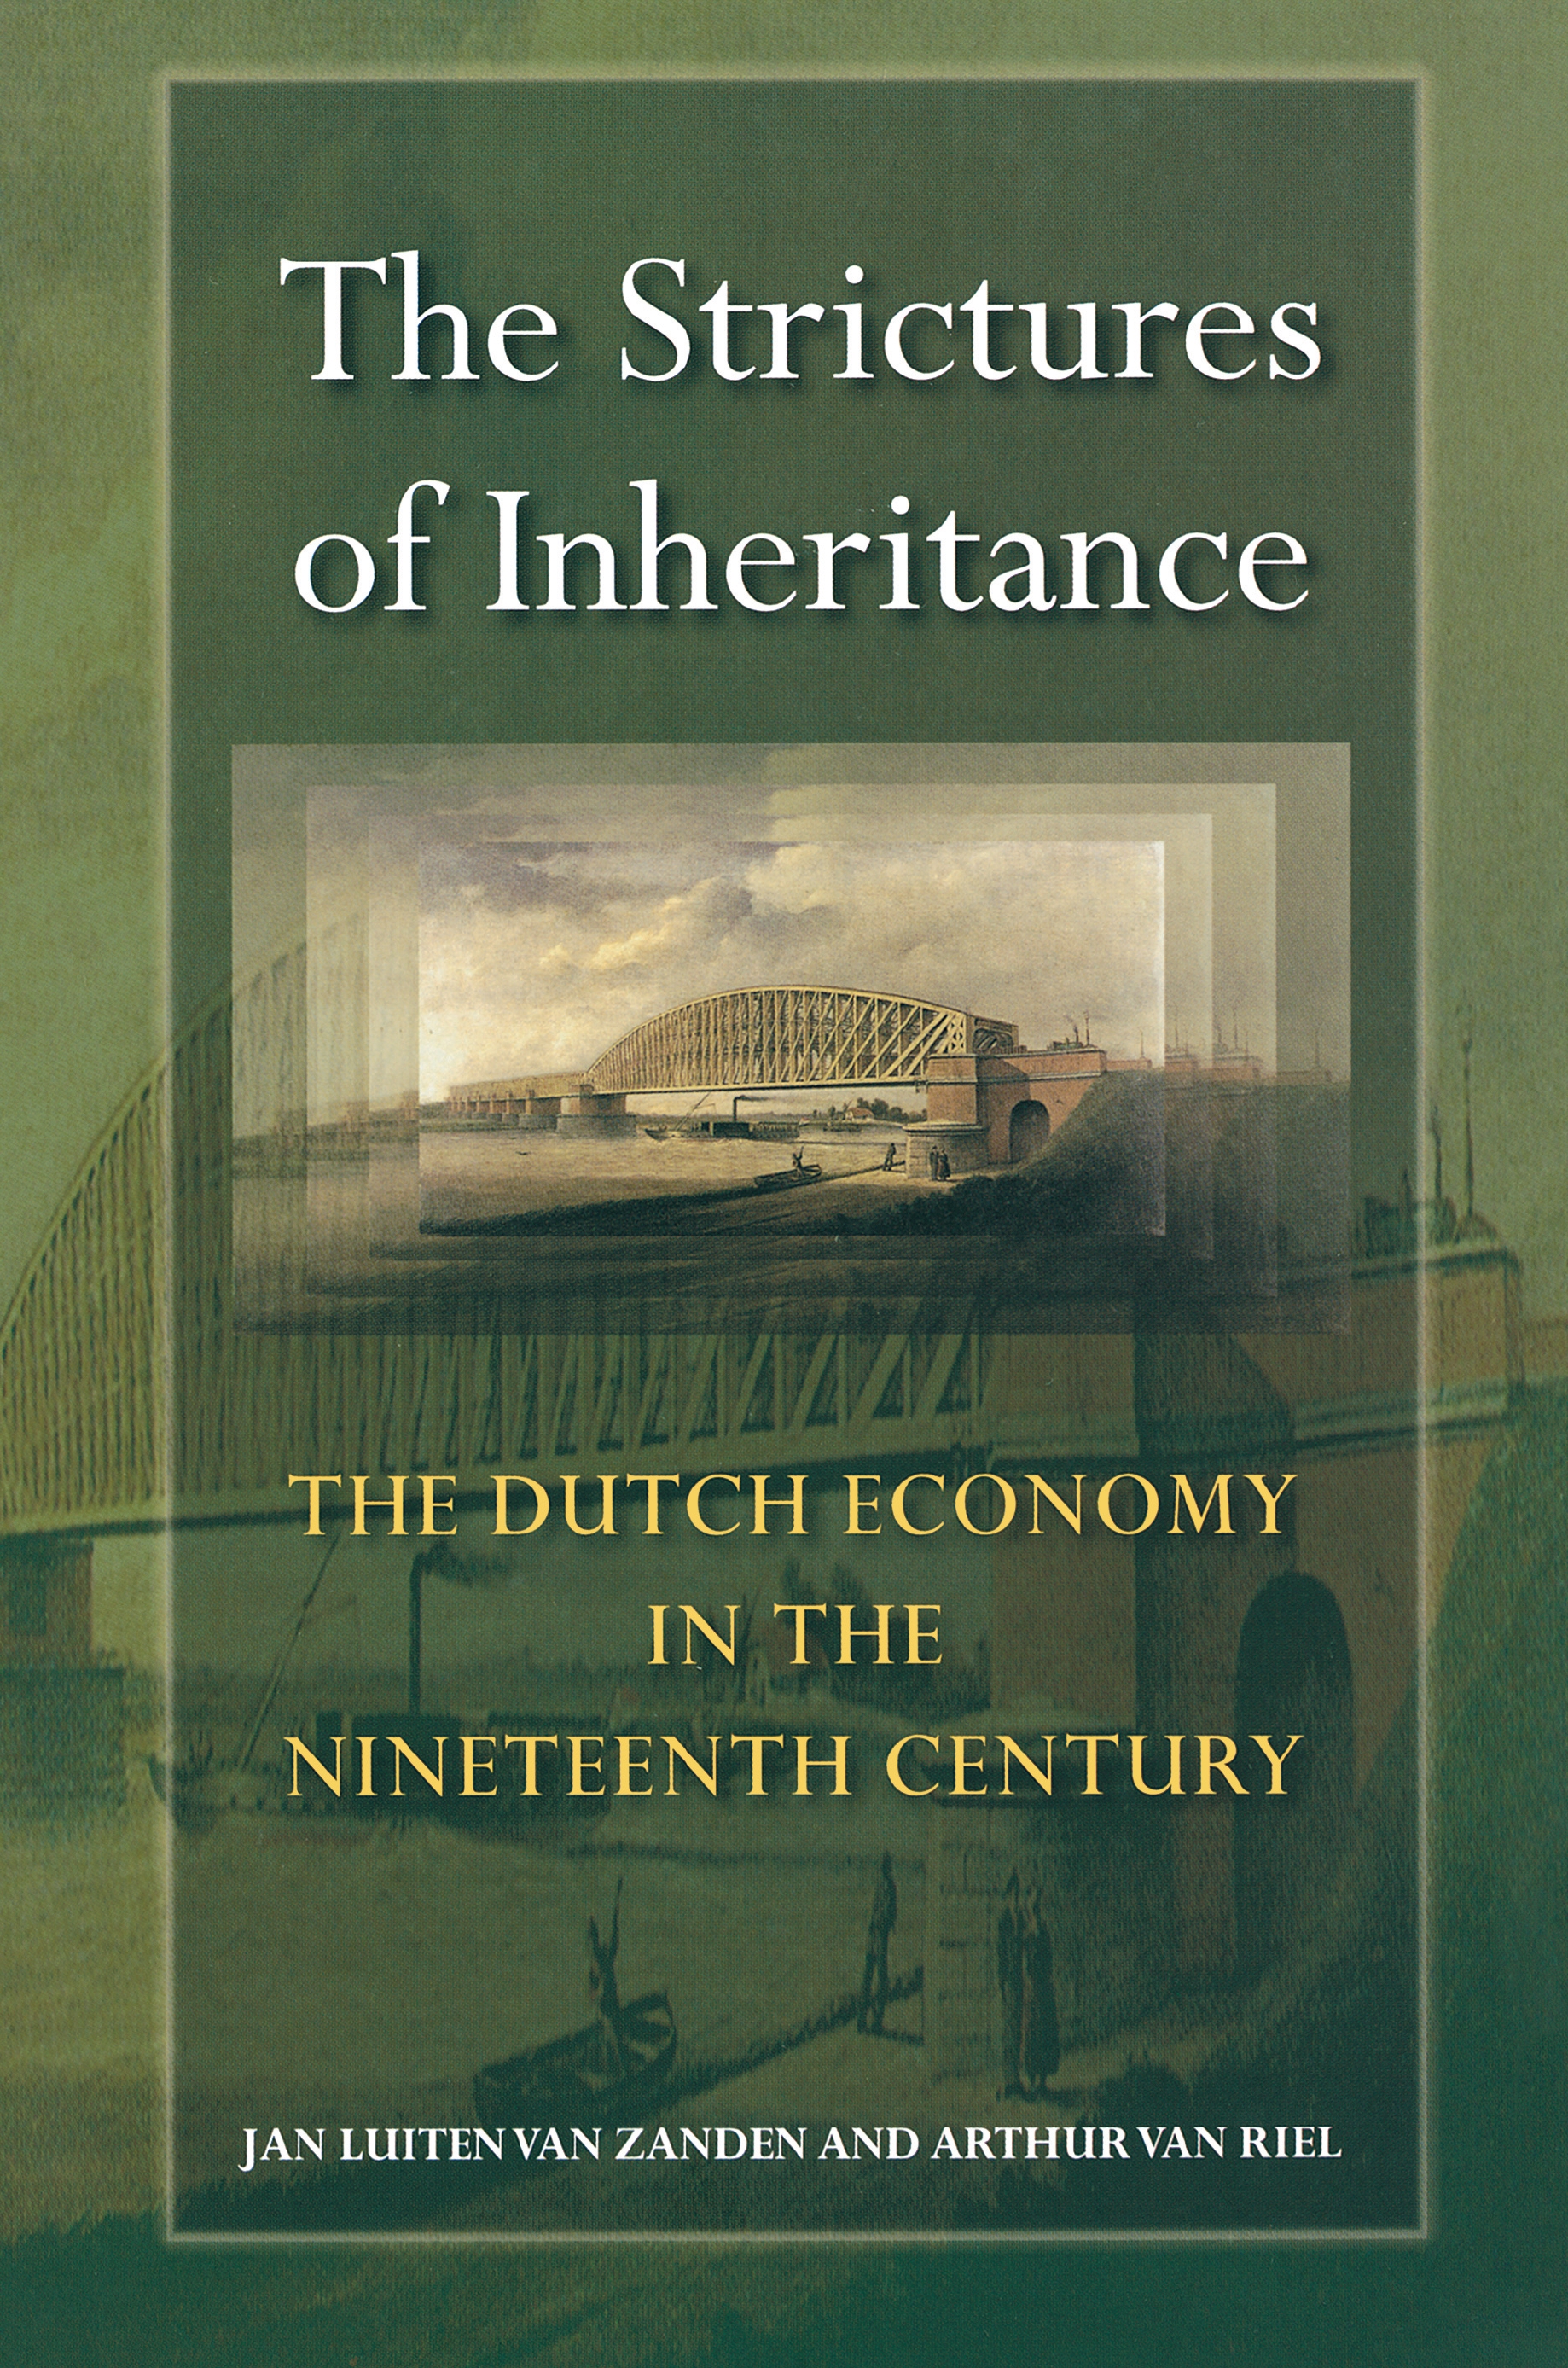 verbannen Niet modieus Voorschrijven The Strictures of Inheritance | Princeton University Press